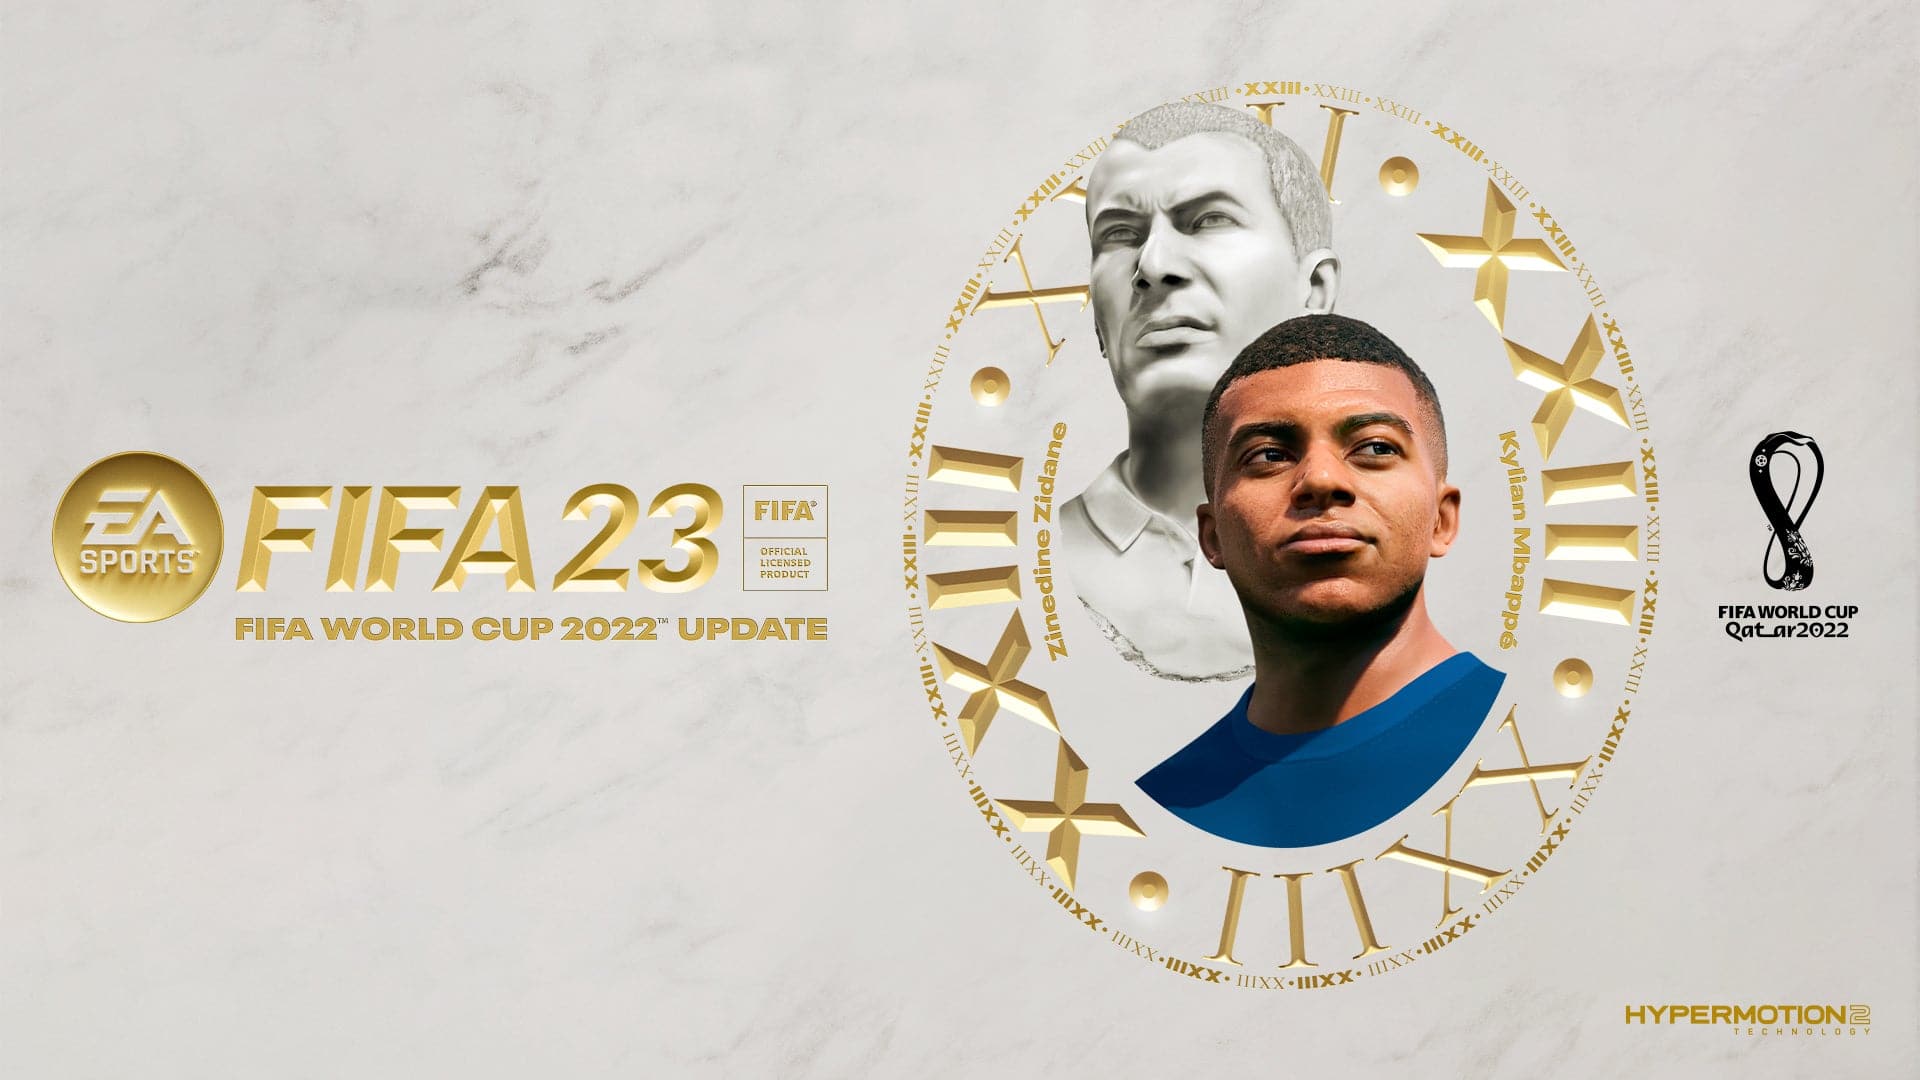 FIFA 23 (Standard Edition) - למחשב